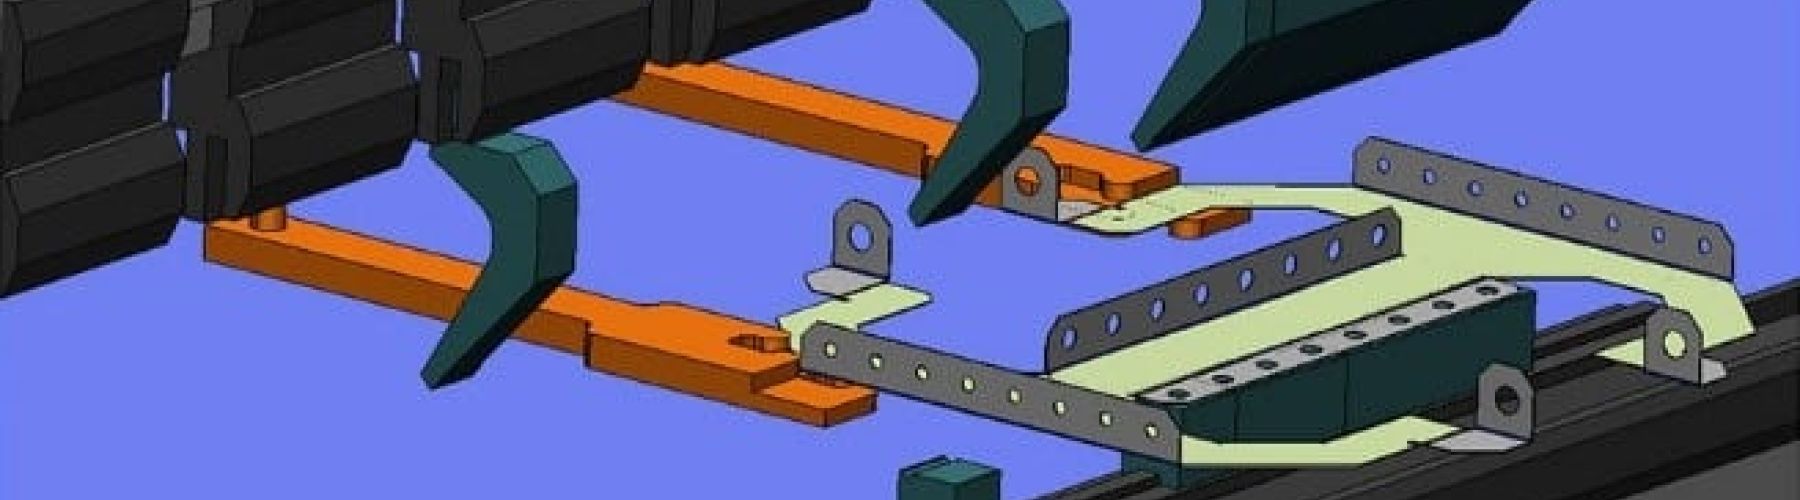 MBend-for-programming-and-simulating-CNC-press-brake-setups